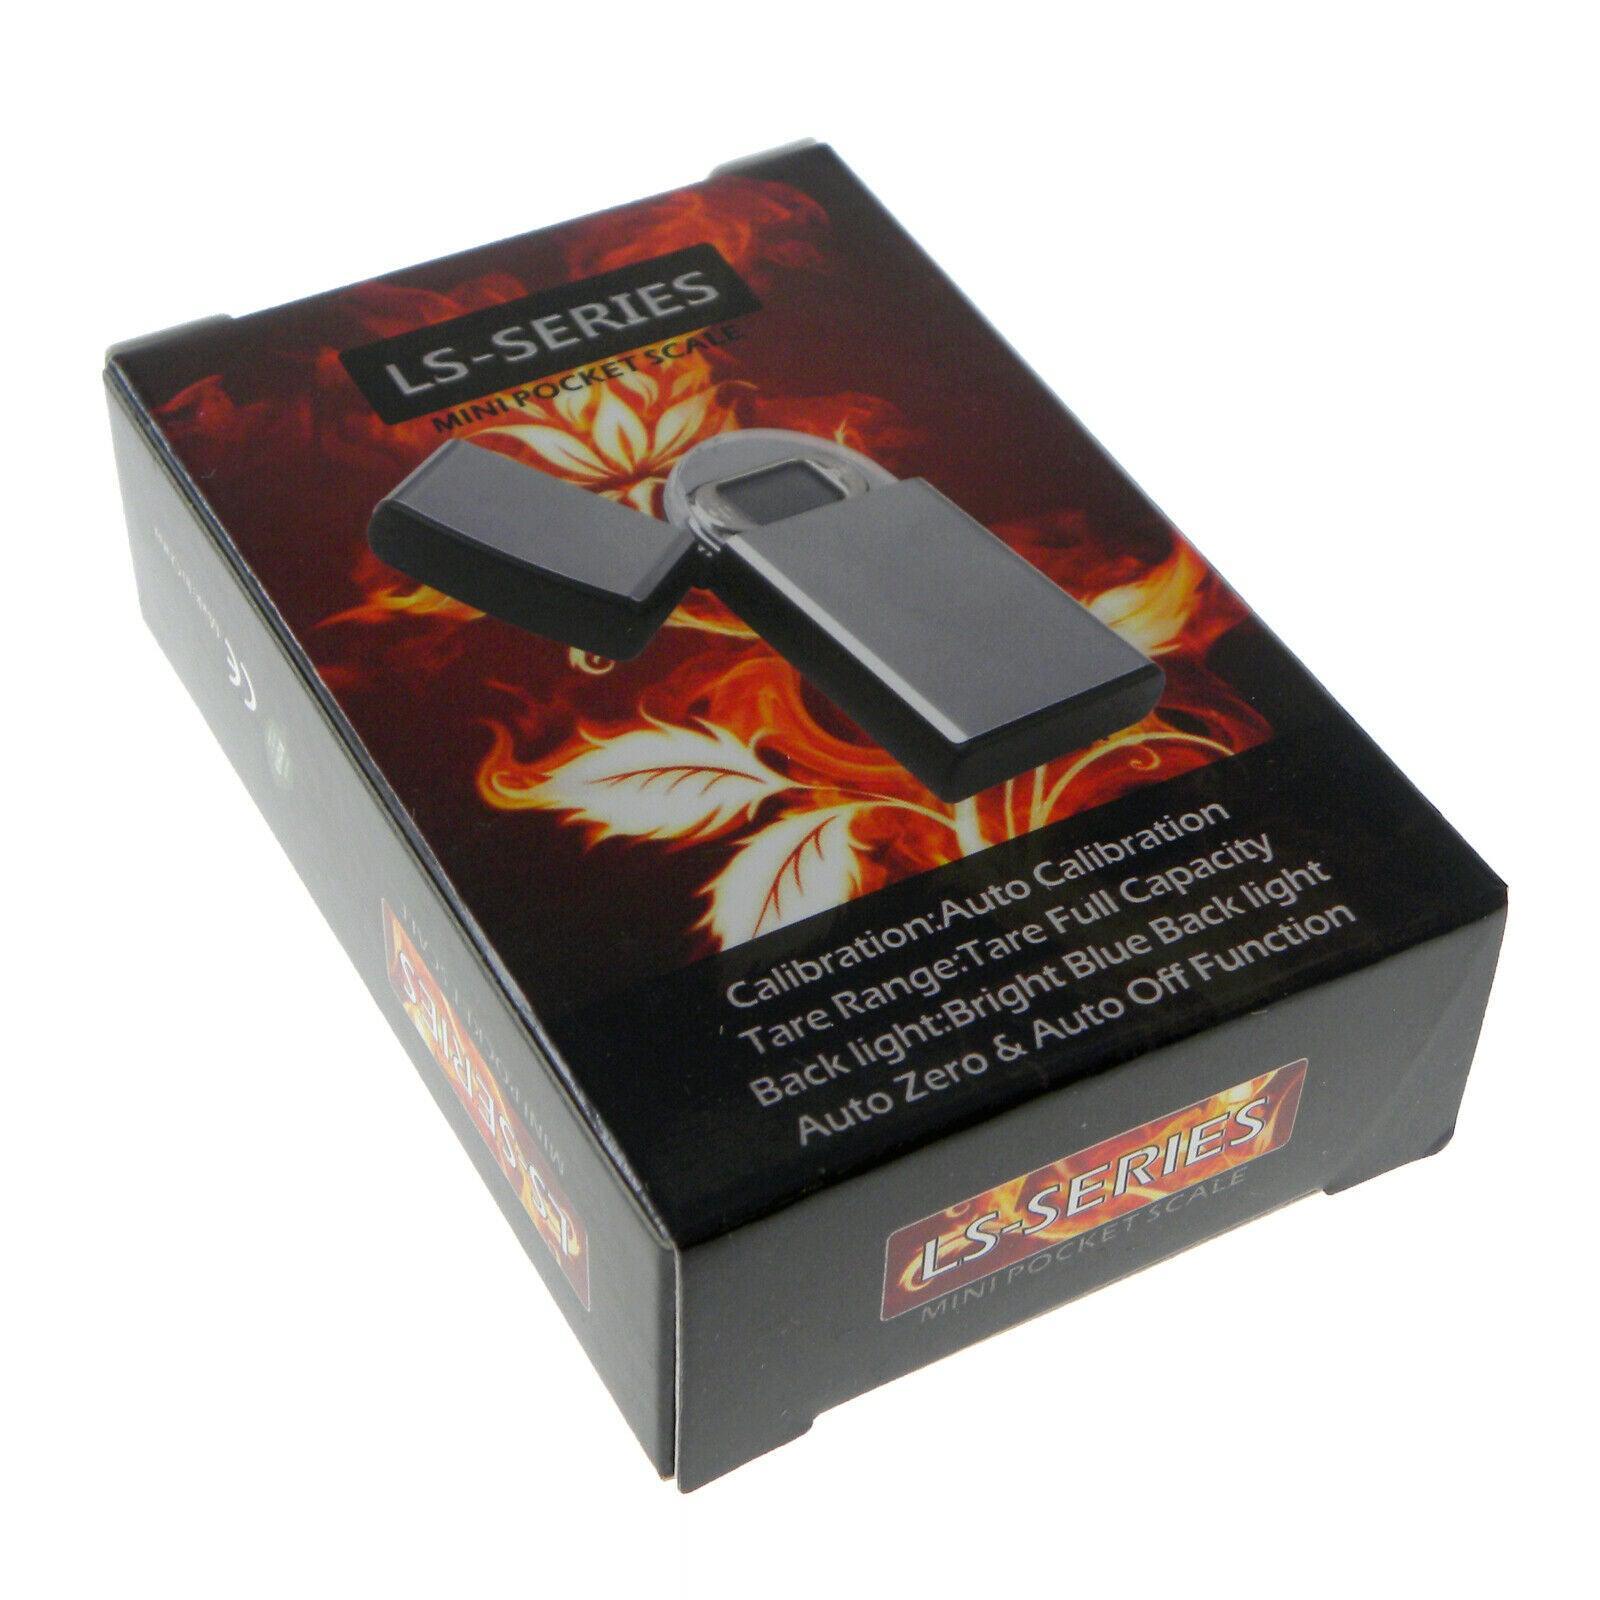 Zippo Lighter Digital Pocket Scales 0.01-100g - Best Bongs And More